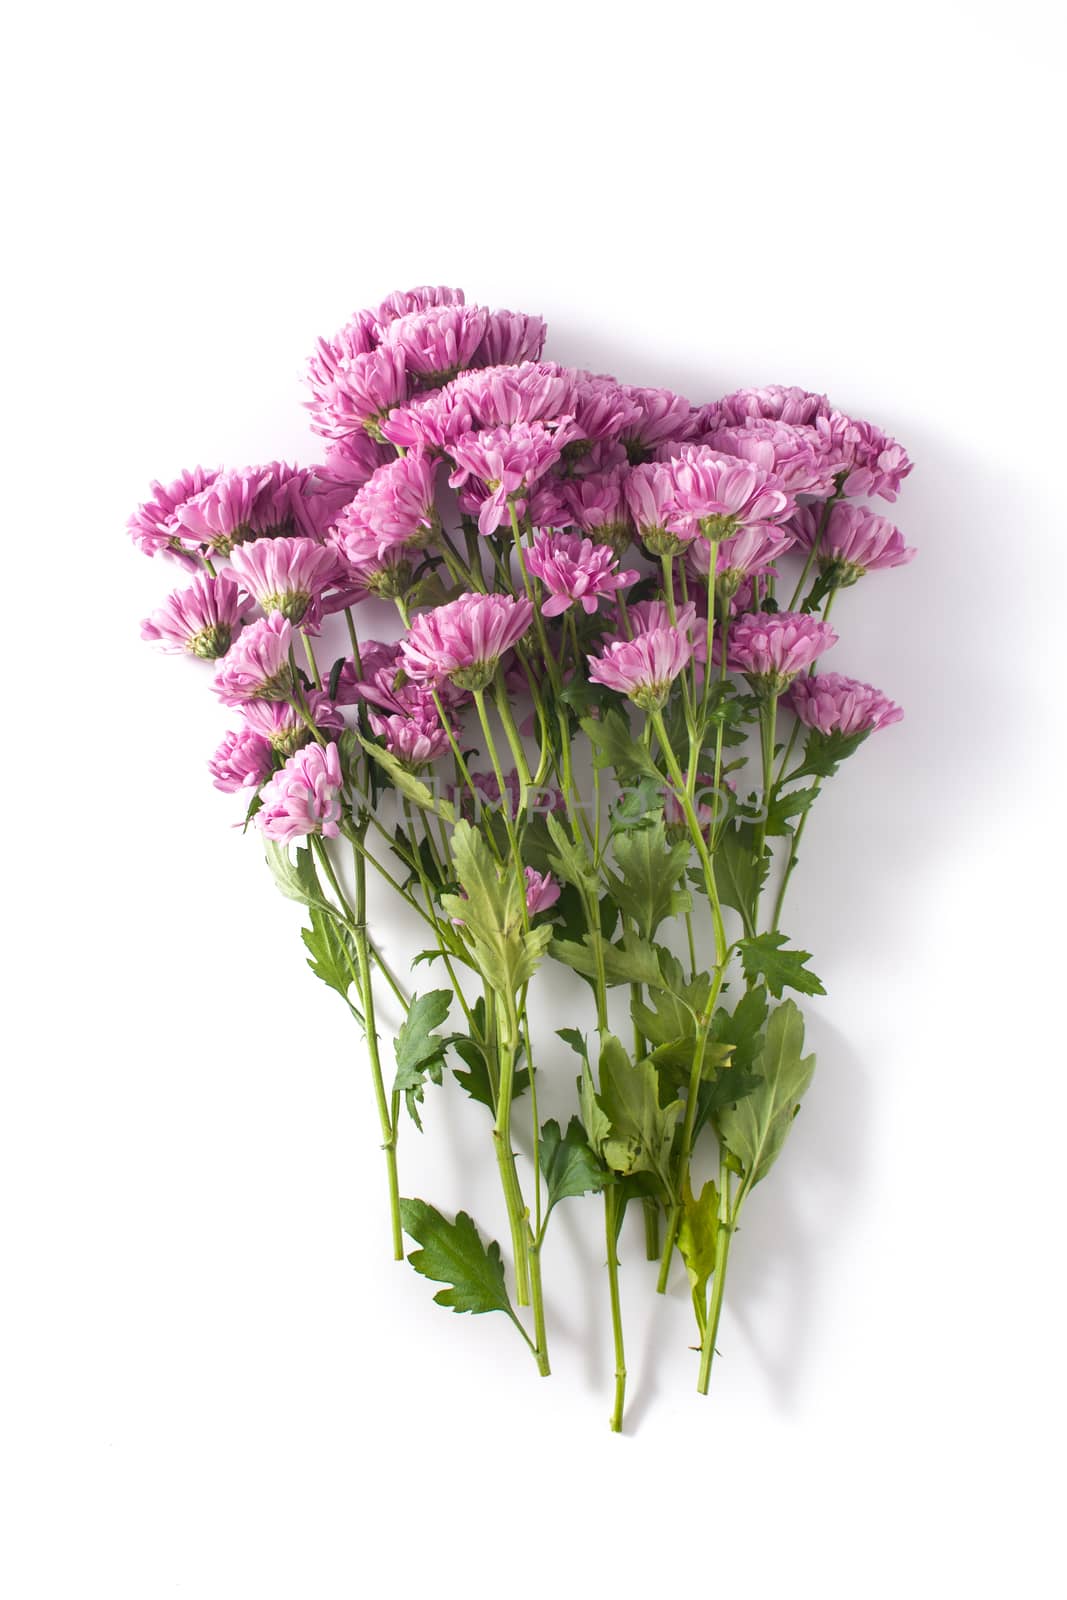 Violet chrysanthemum flowers bouquet  by chandlervid85